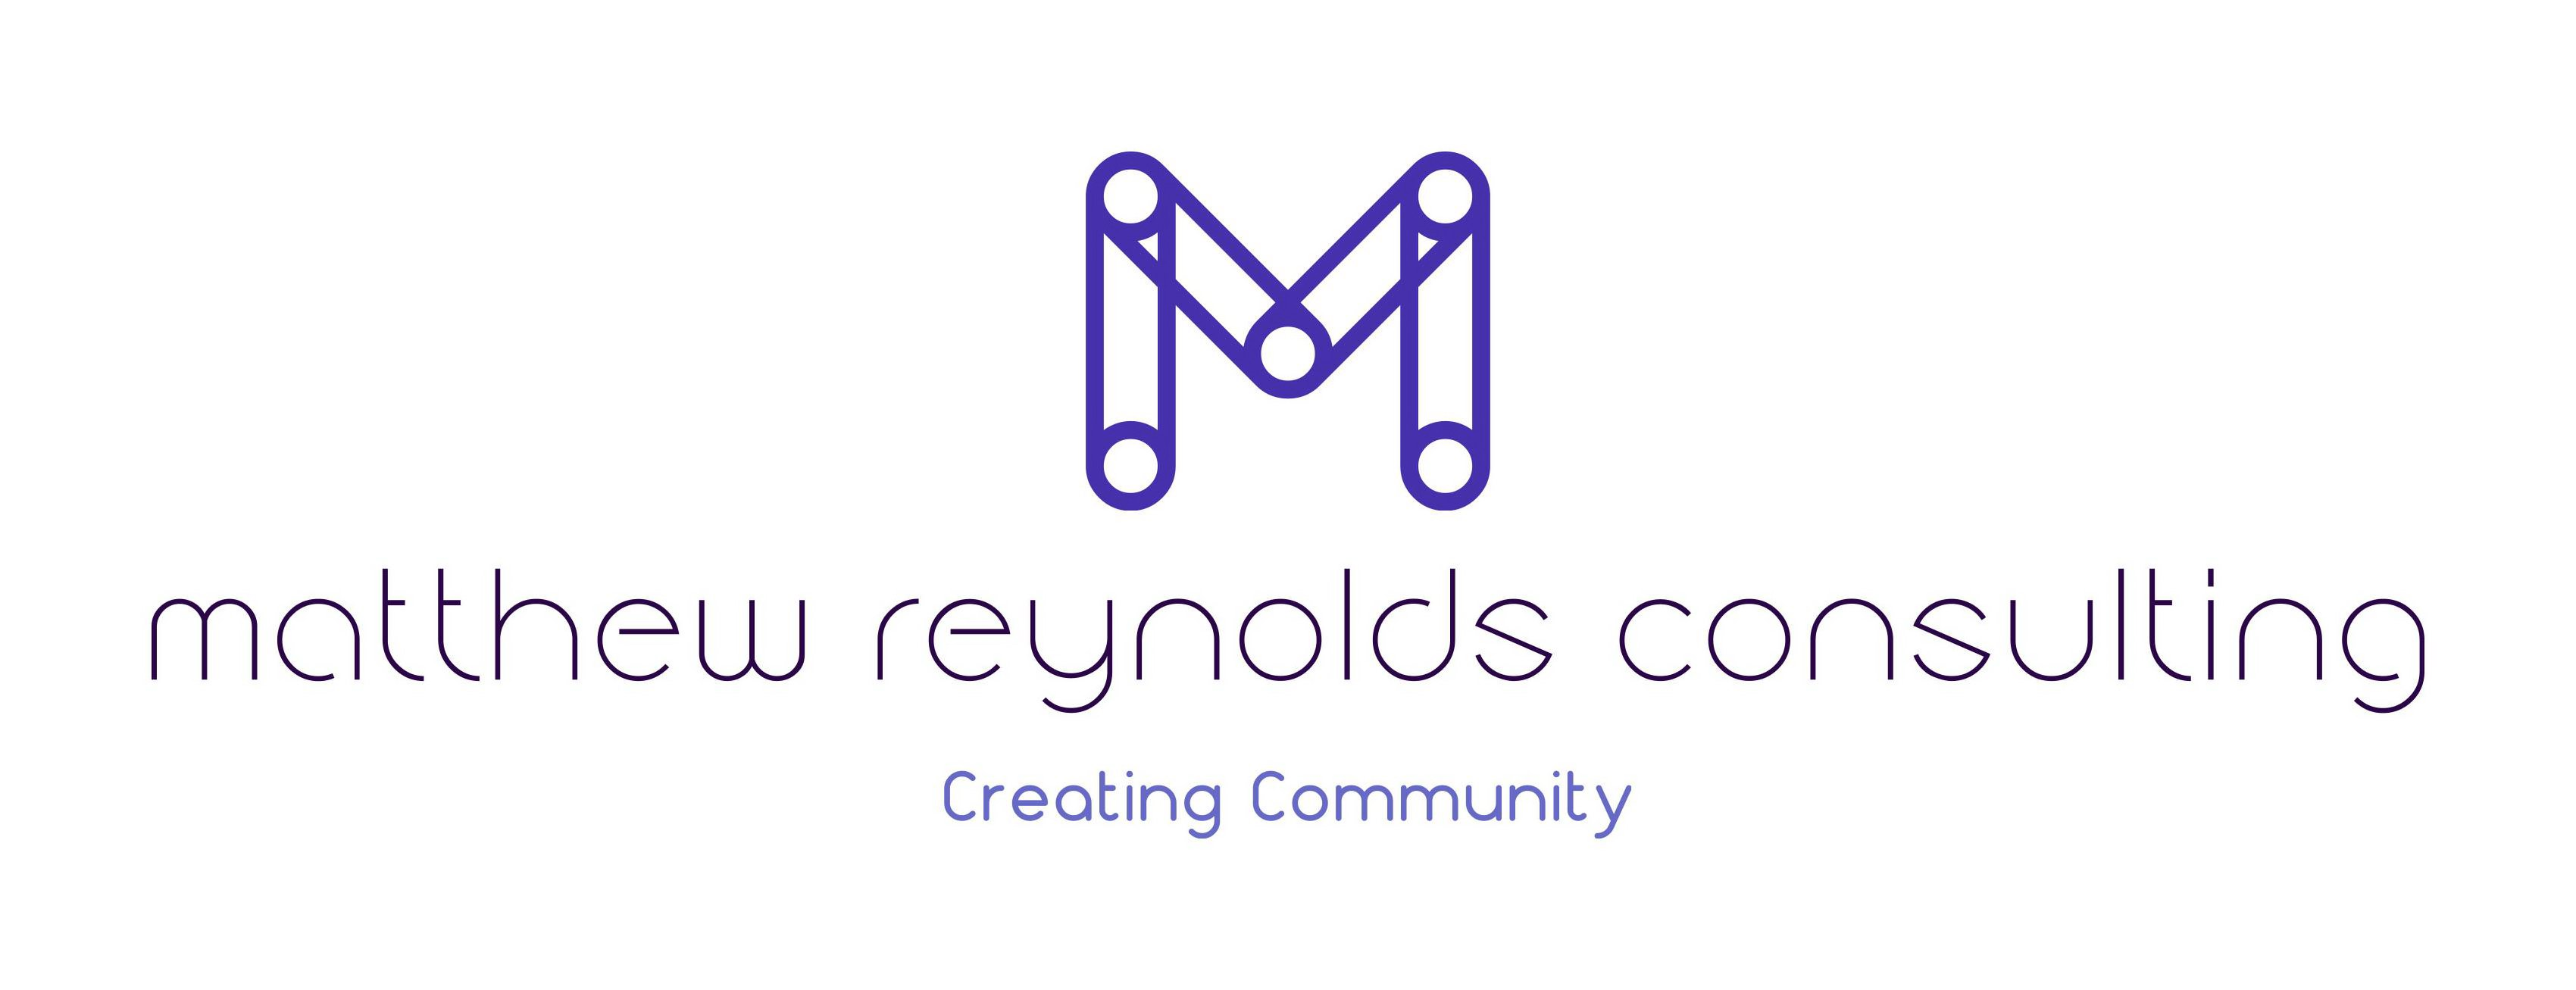  "MATTHEW REYNOLDS CONSULTING" "CREATING COMMUNITY"